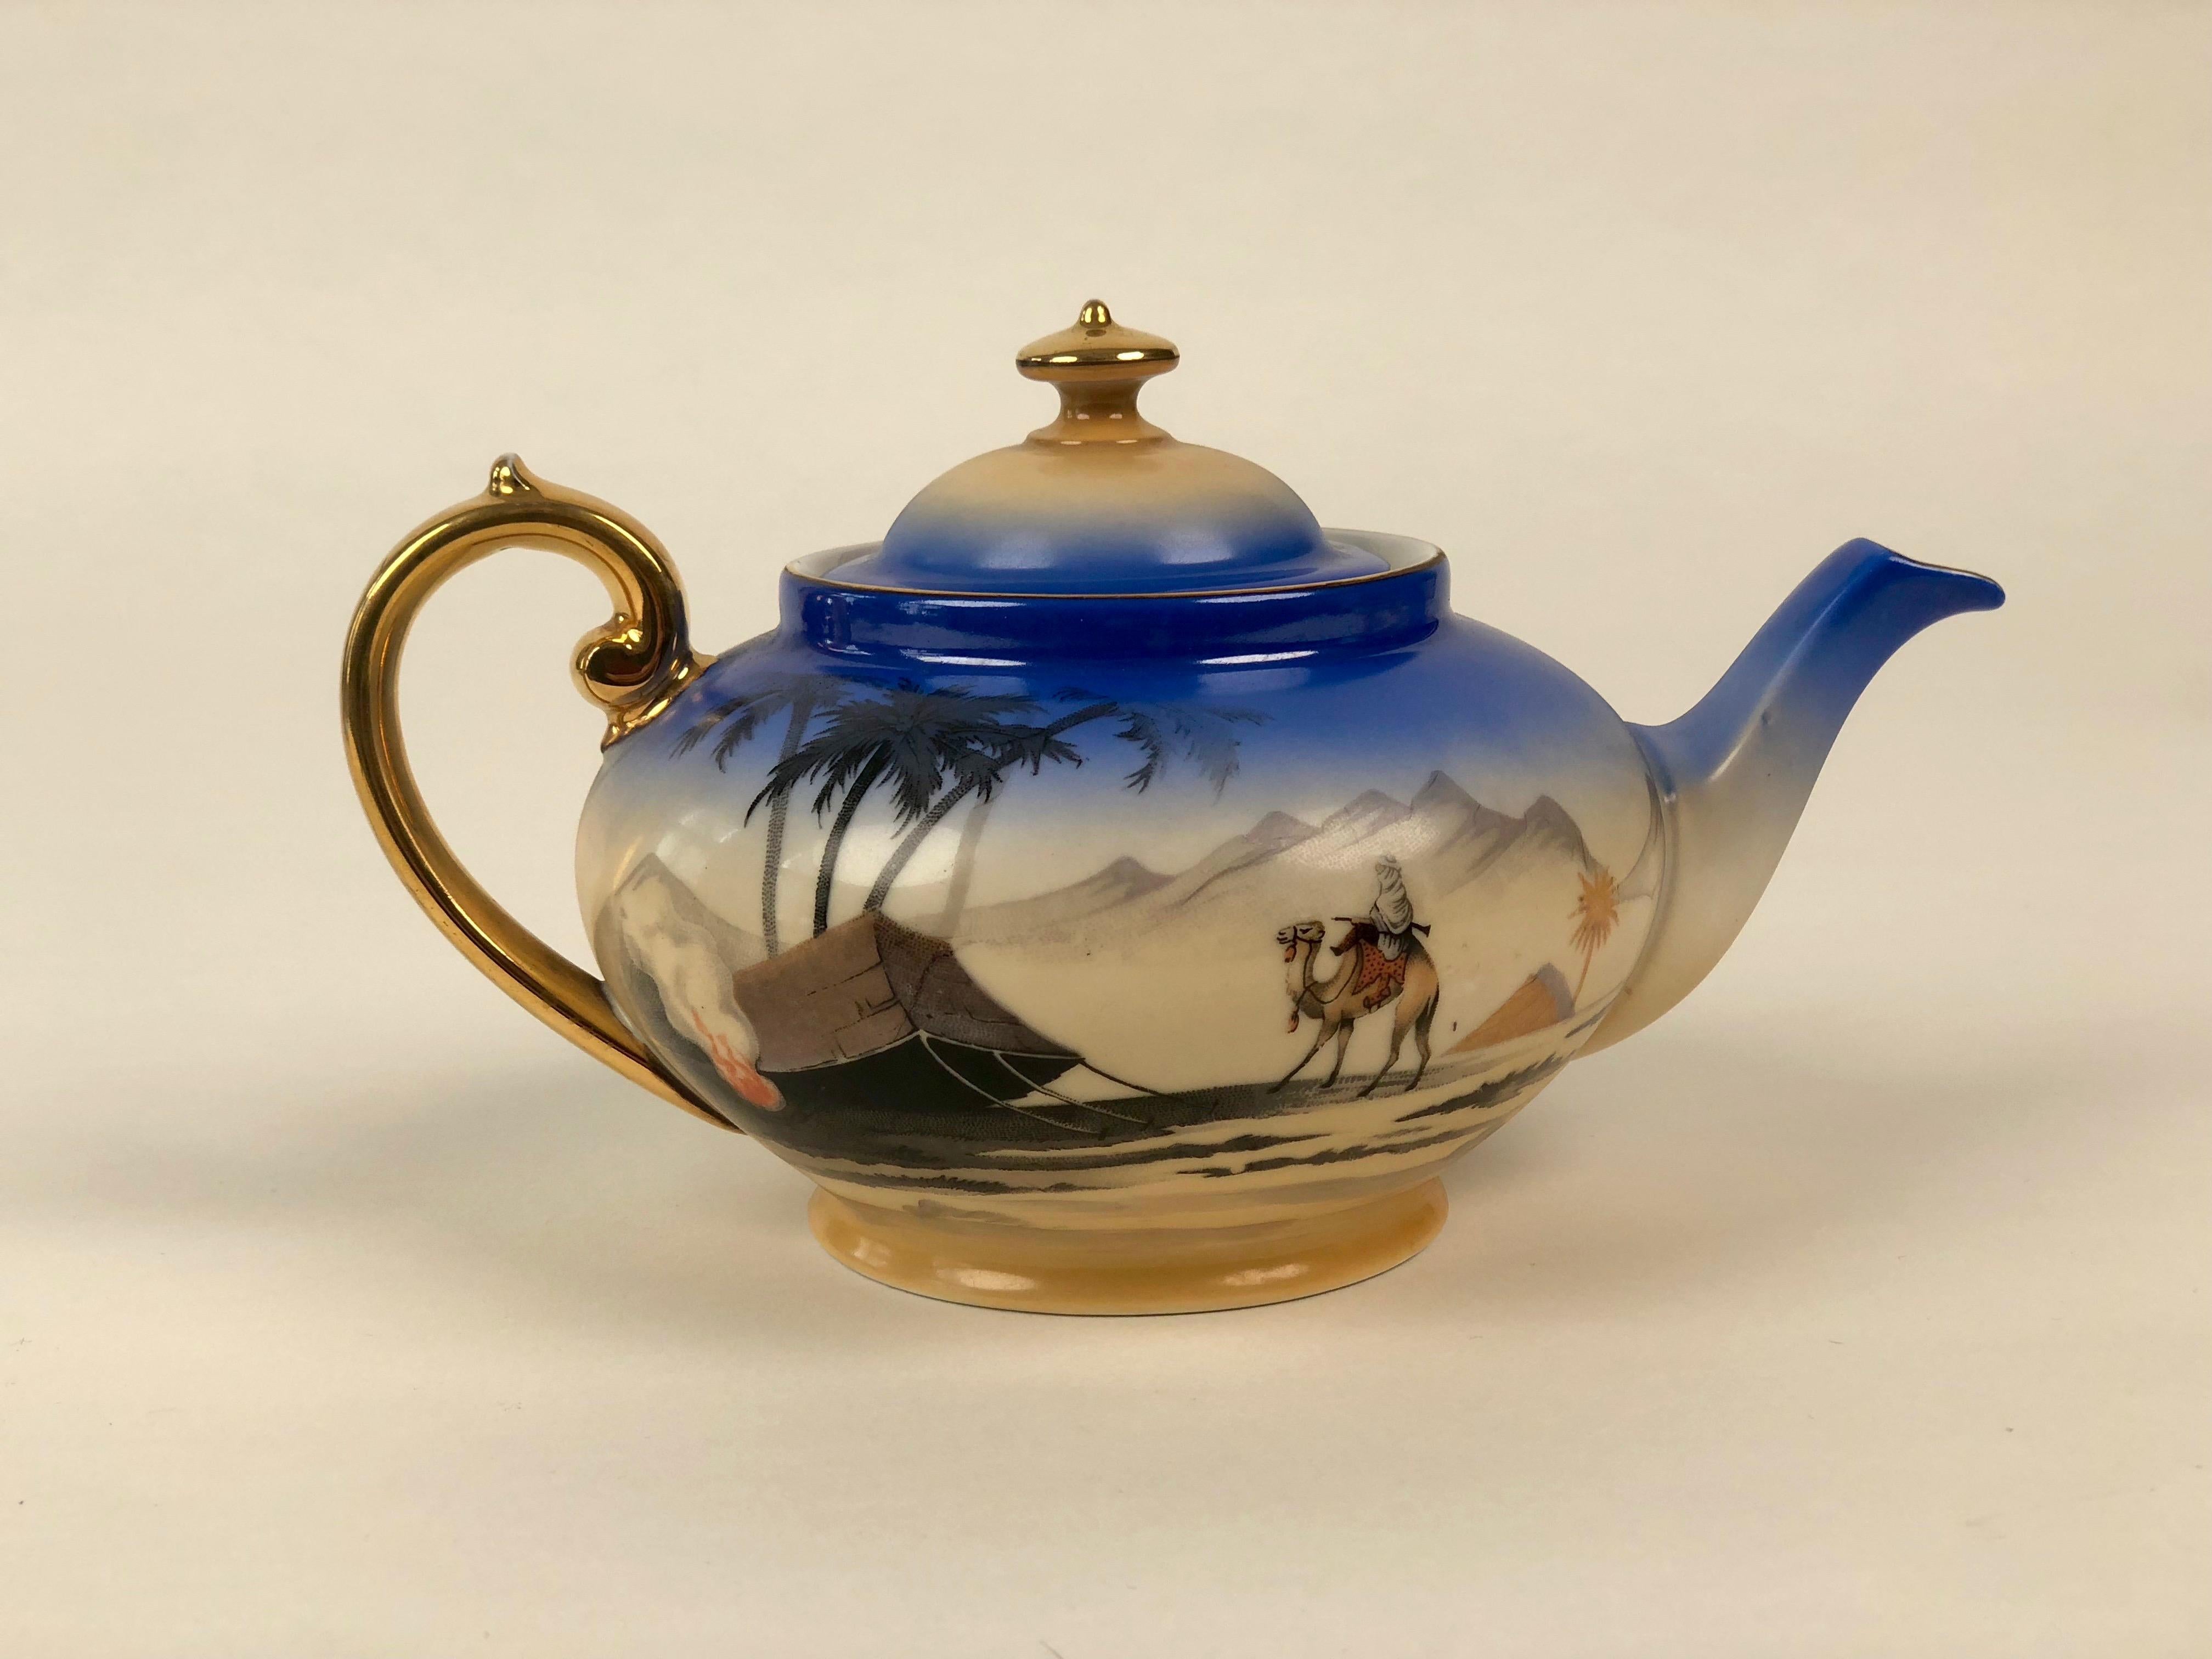 Modern Porcelain Tea Set, Model Sahara from 1920s, in Cabana Style For Sale